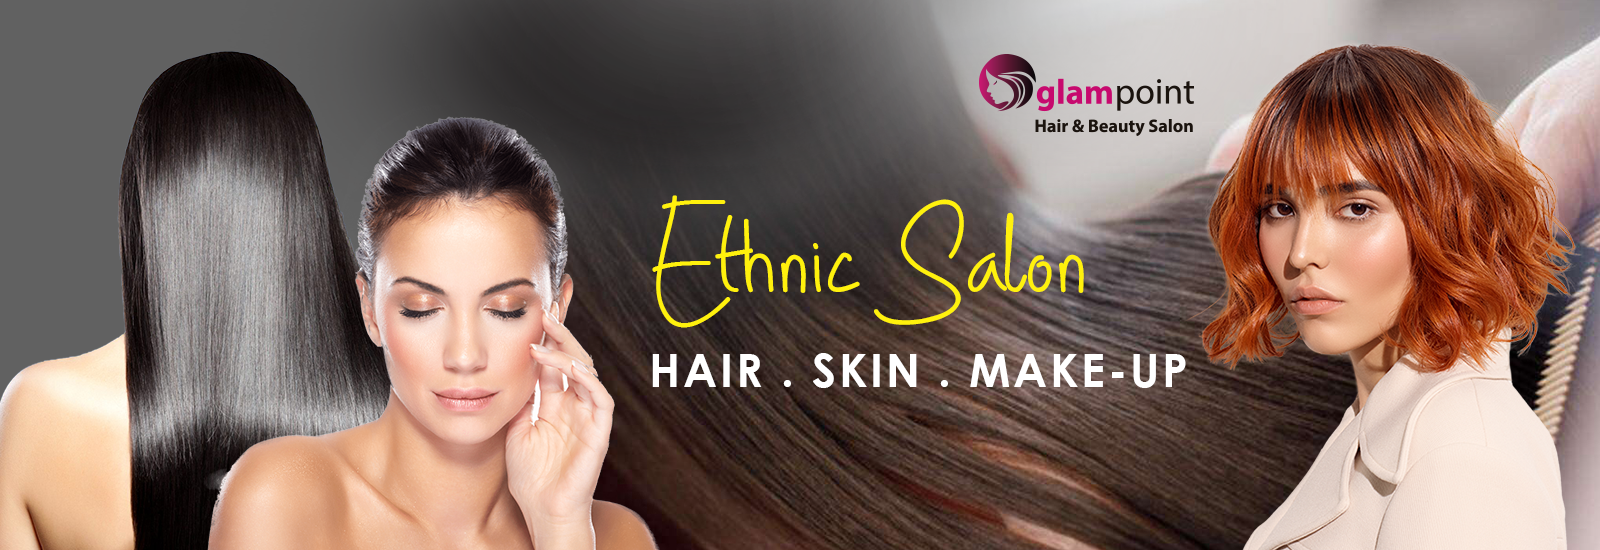 ethnic salon - glampoint